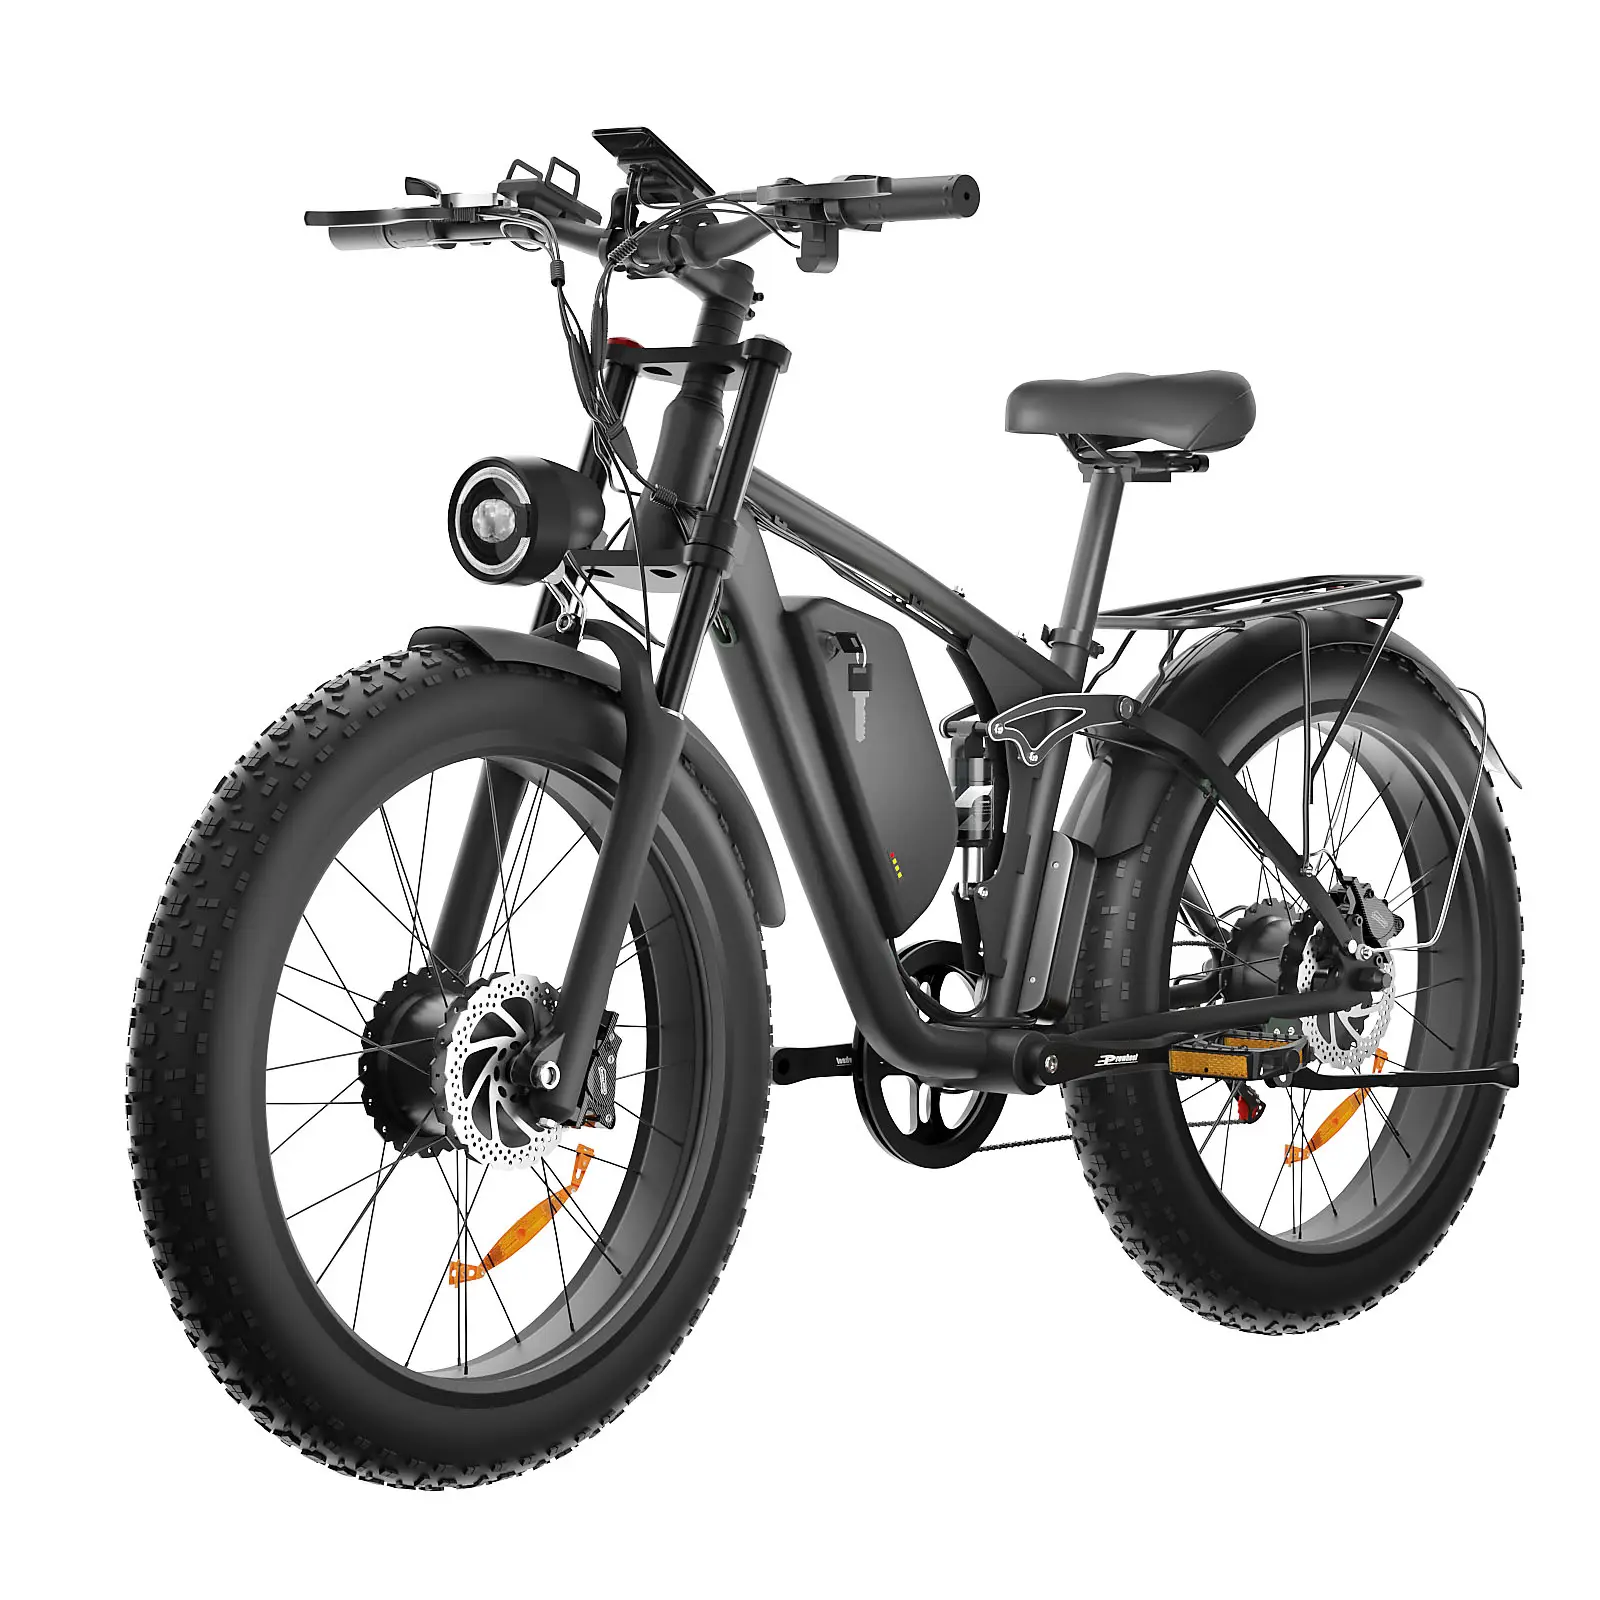 हमारे गोदाम 2000w दोहरी मोटर इलेक्ट्रिक बाइक 22.4 आह बैटरी दो व्हील ड्राइव ई-बाइक 26 "x 4.0" वसा टायर दोहरी मोटर इलेक्ट्रिक साइकिल